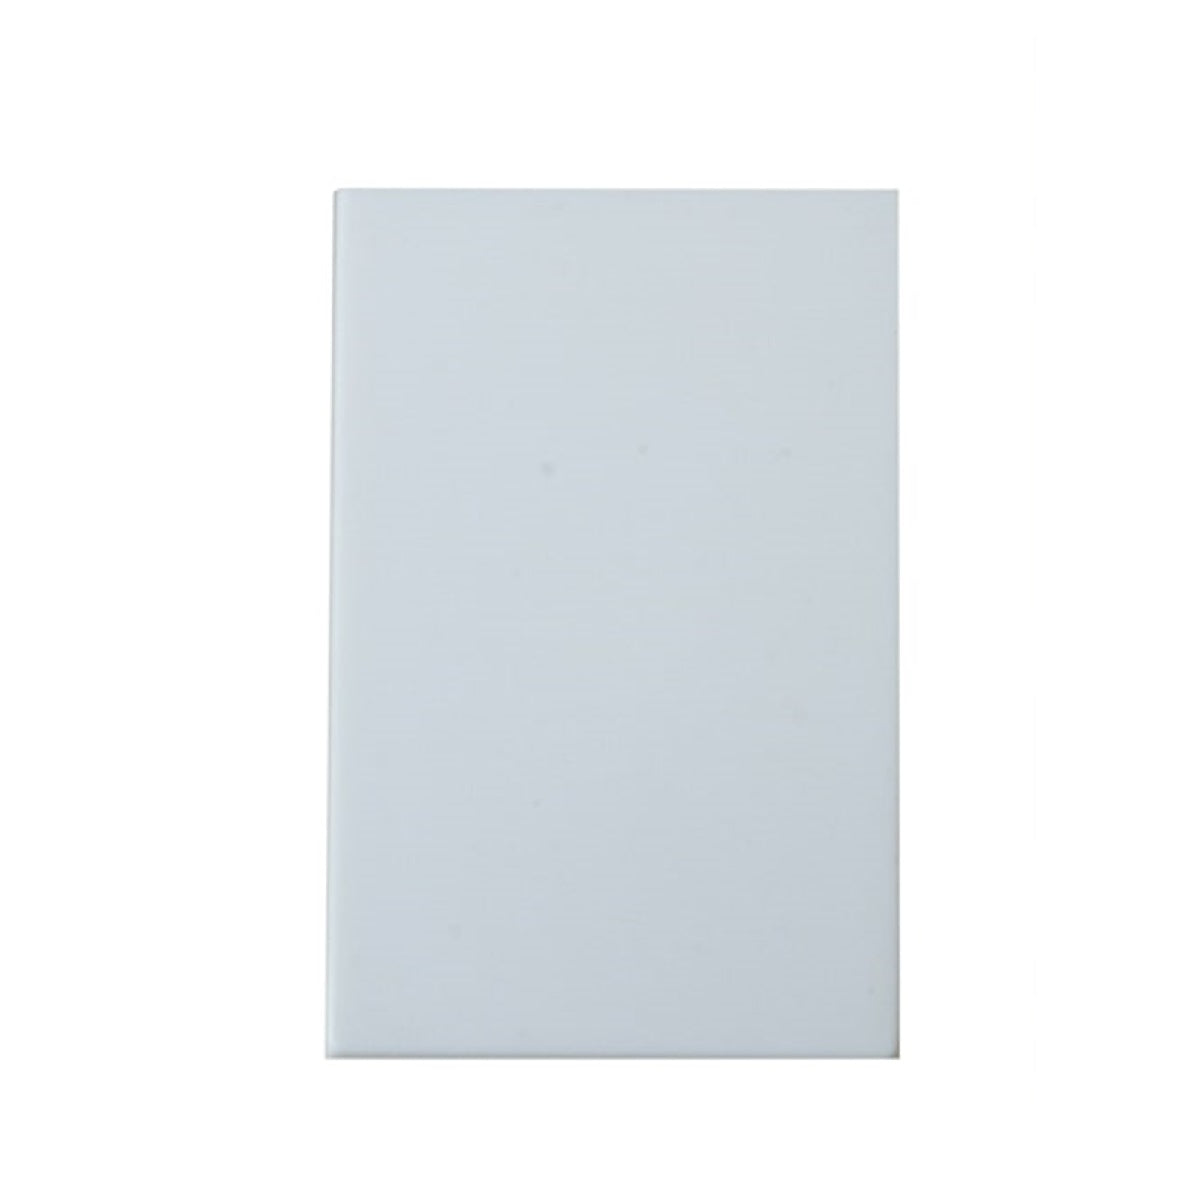 Excel 100-719 White Euro Half Faceplate Blank